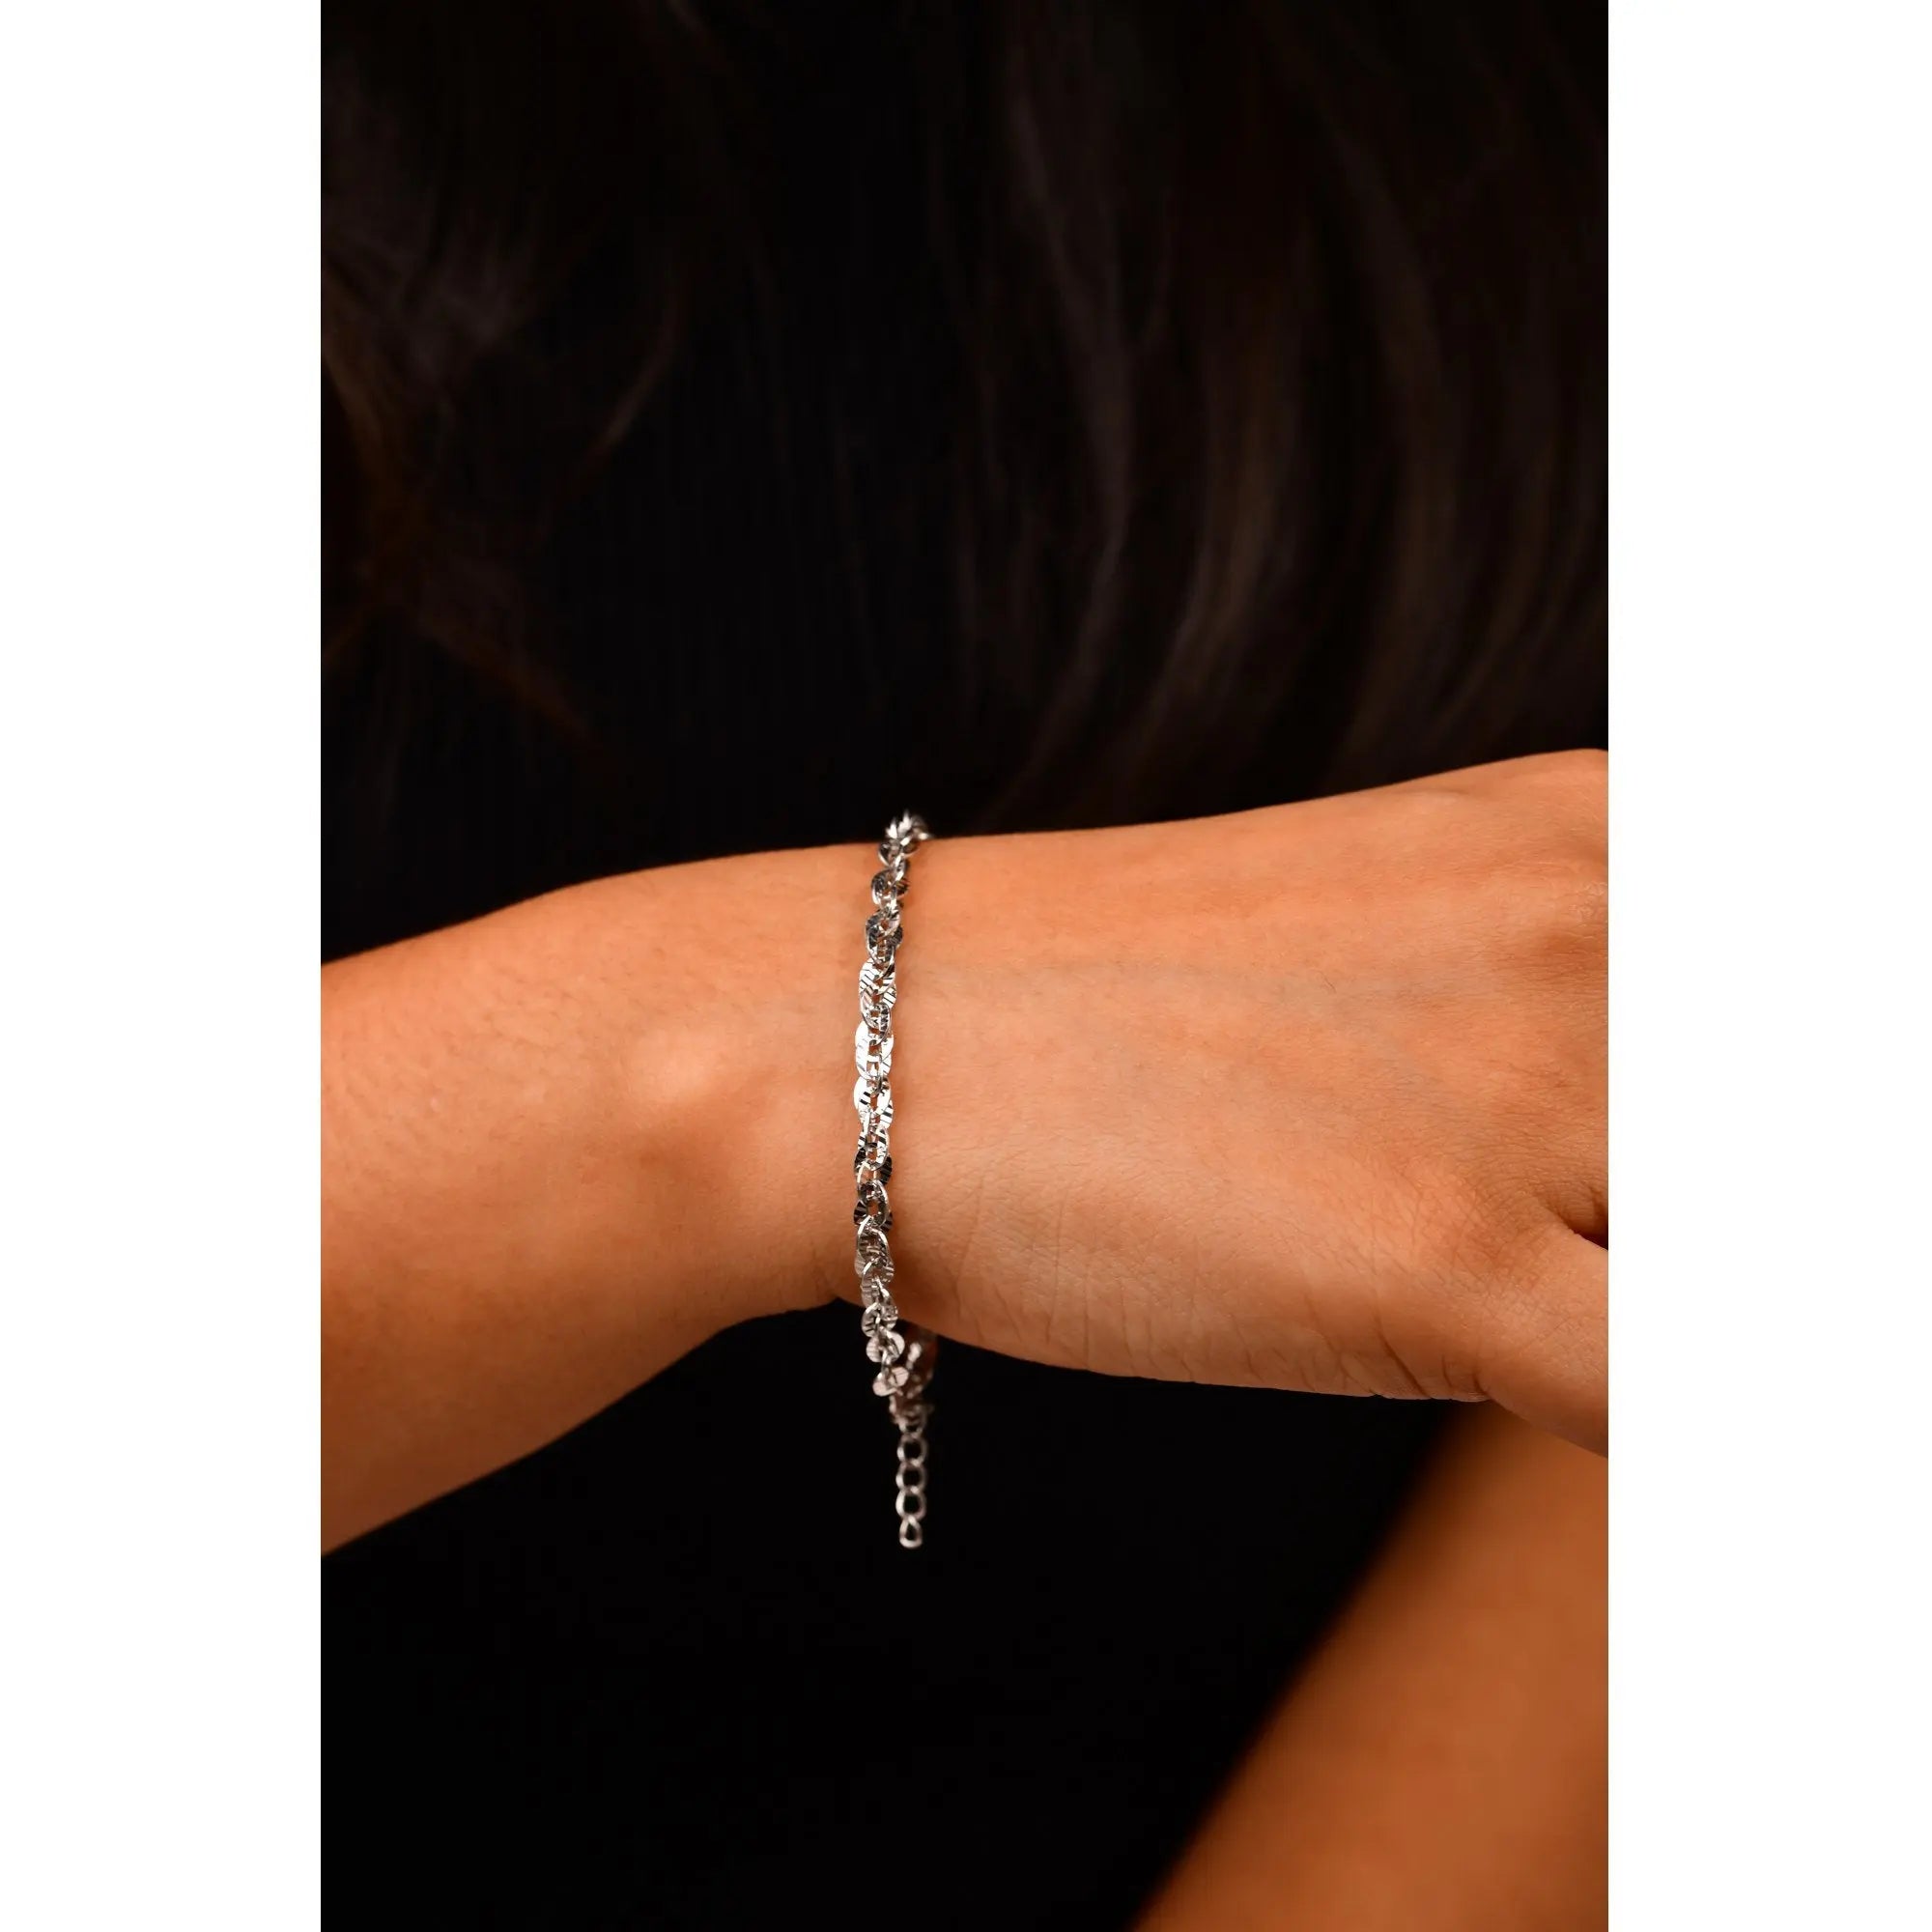 Designer Shiny Platinum Bracelet for Women JL PTB 661   Jewelove.US